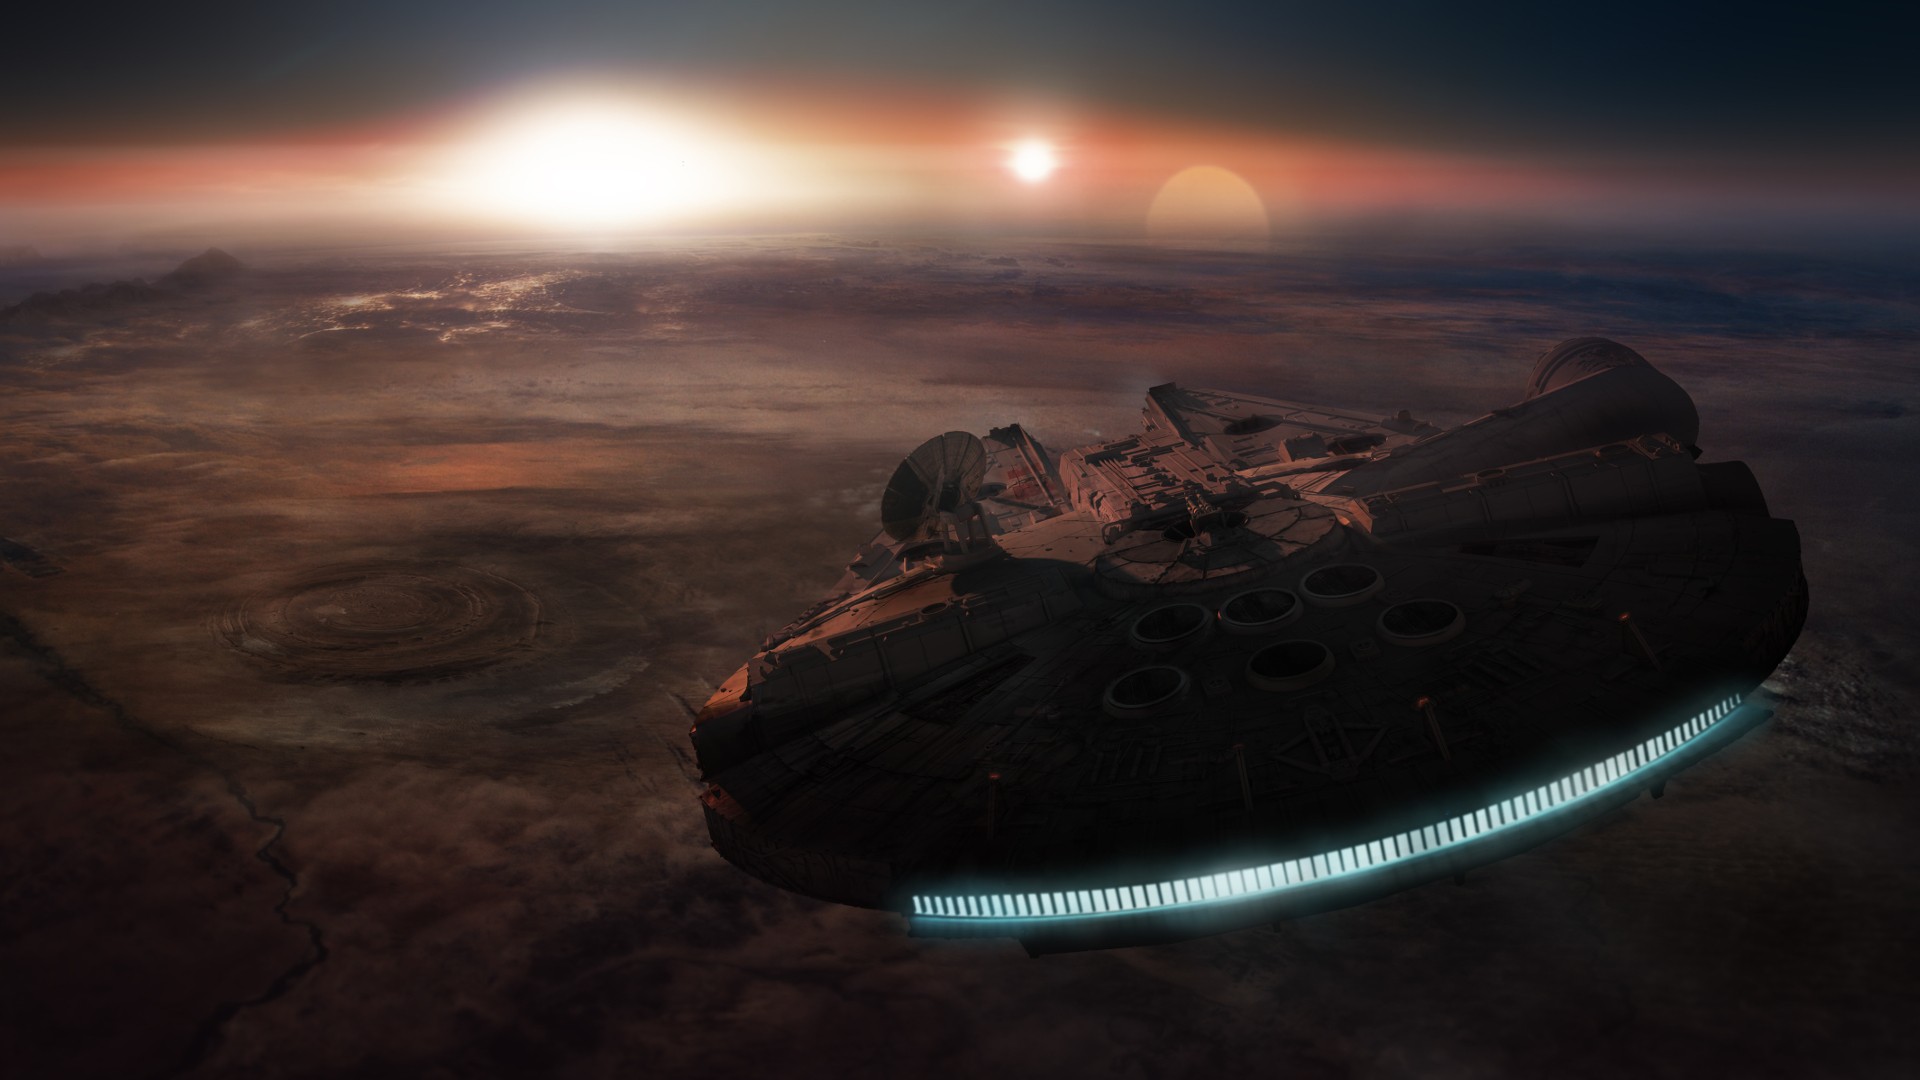 General 1920x1080 Star Wars Millennium Falcon Star Wars Ships science fiction vehicle planet spaceship sky desert CGI digital art artwork sunlight